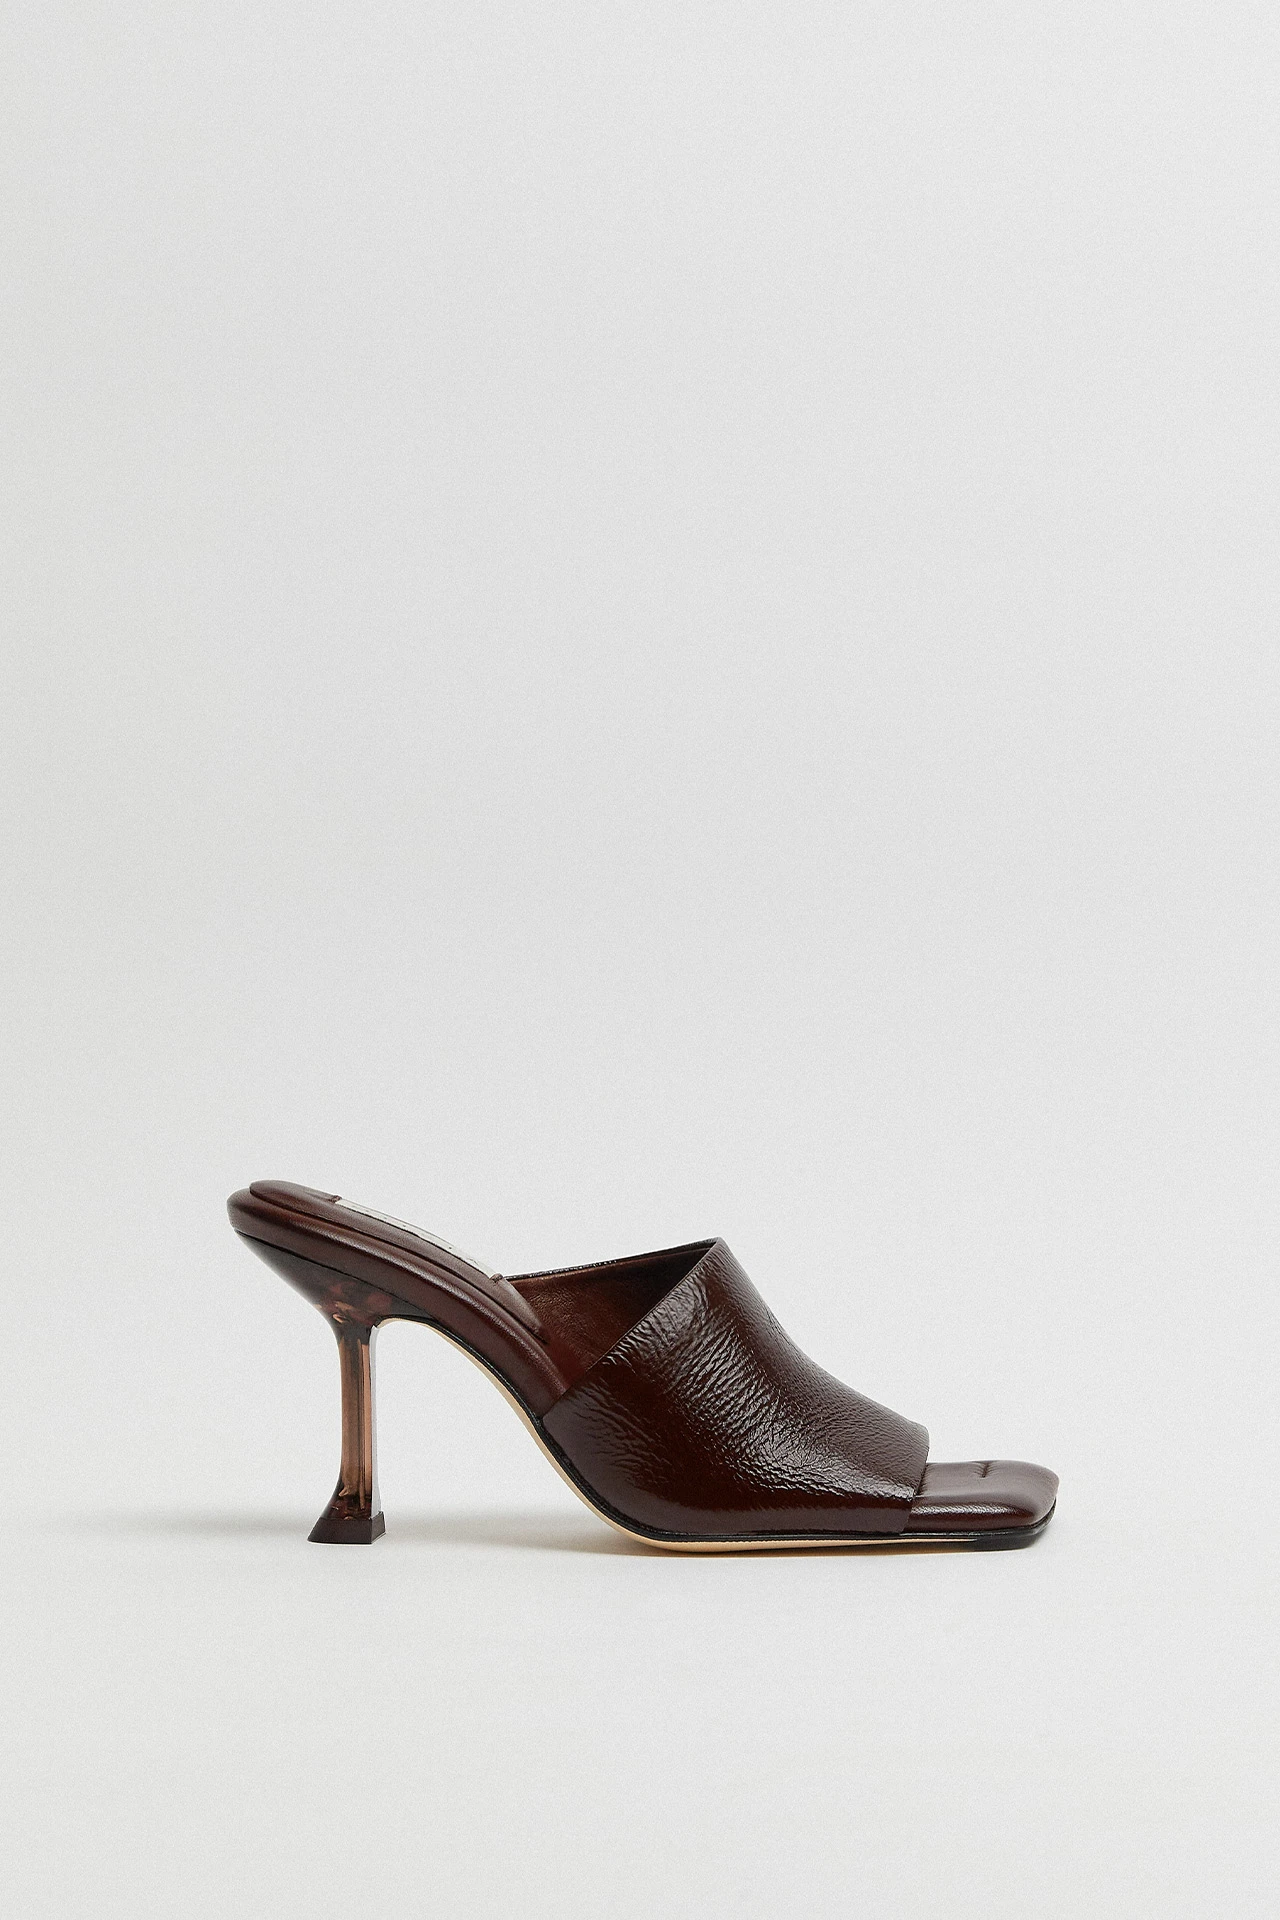 Miista-Miri-Brown-Mules-Sandals-01